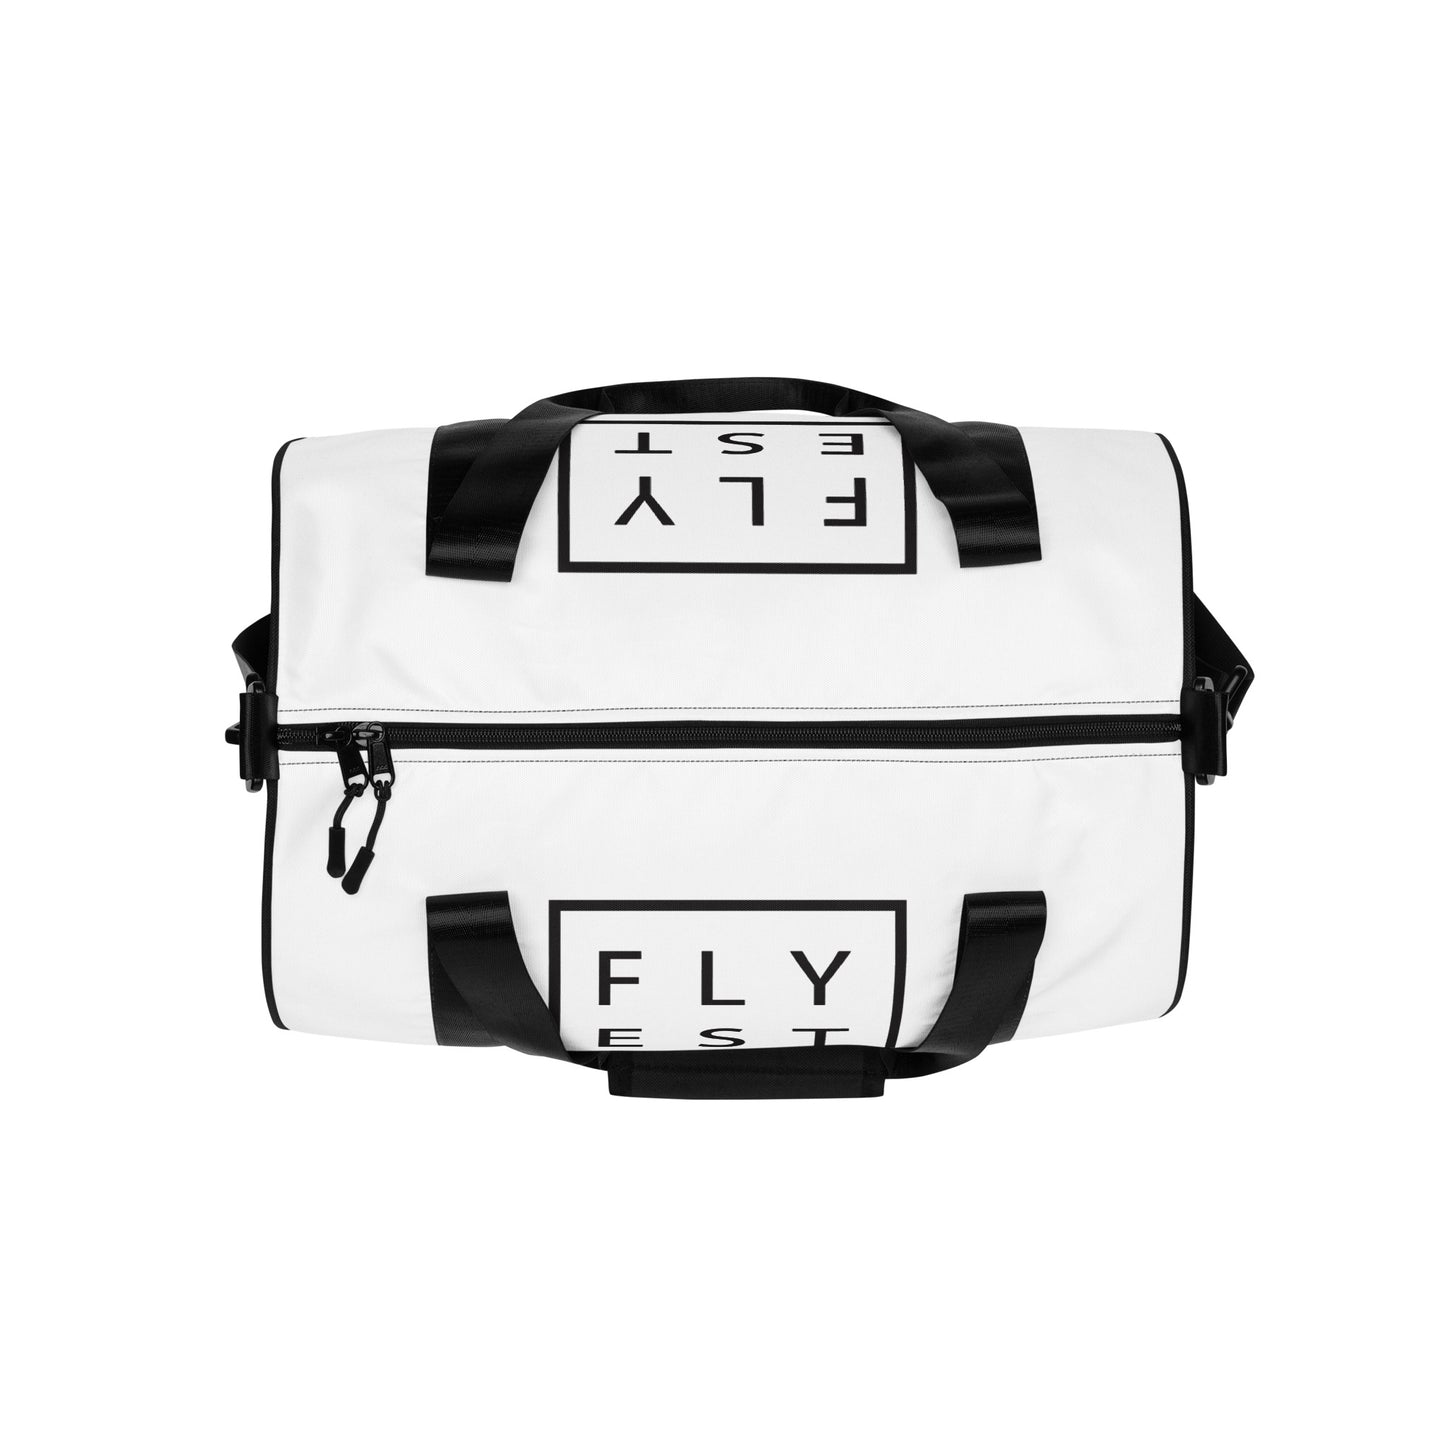 Flyest Block Bag (small)